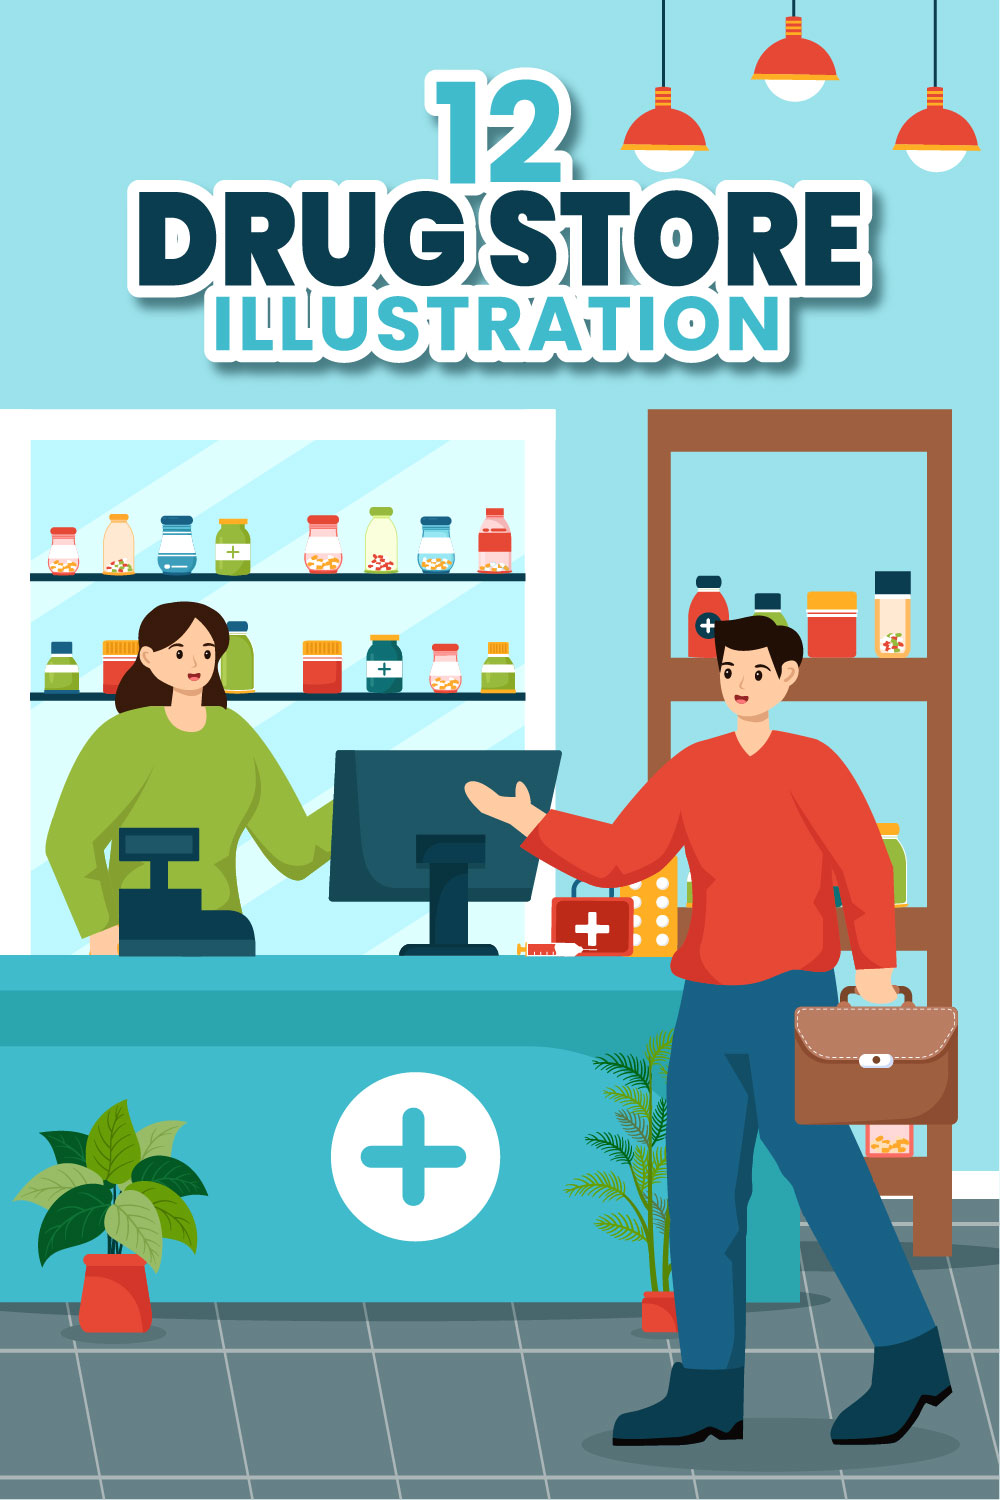 12 Drug Store Illustration pinterest preview image.